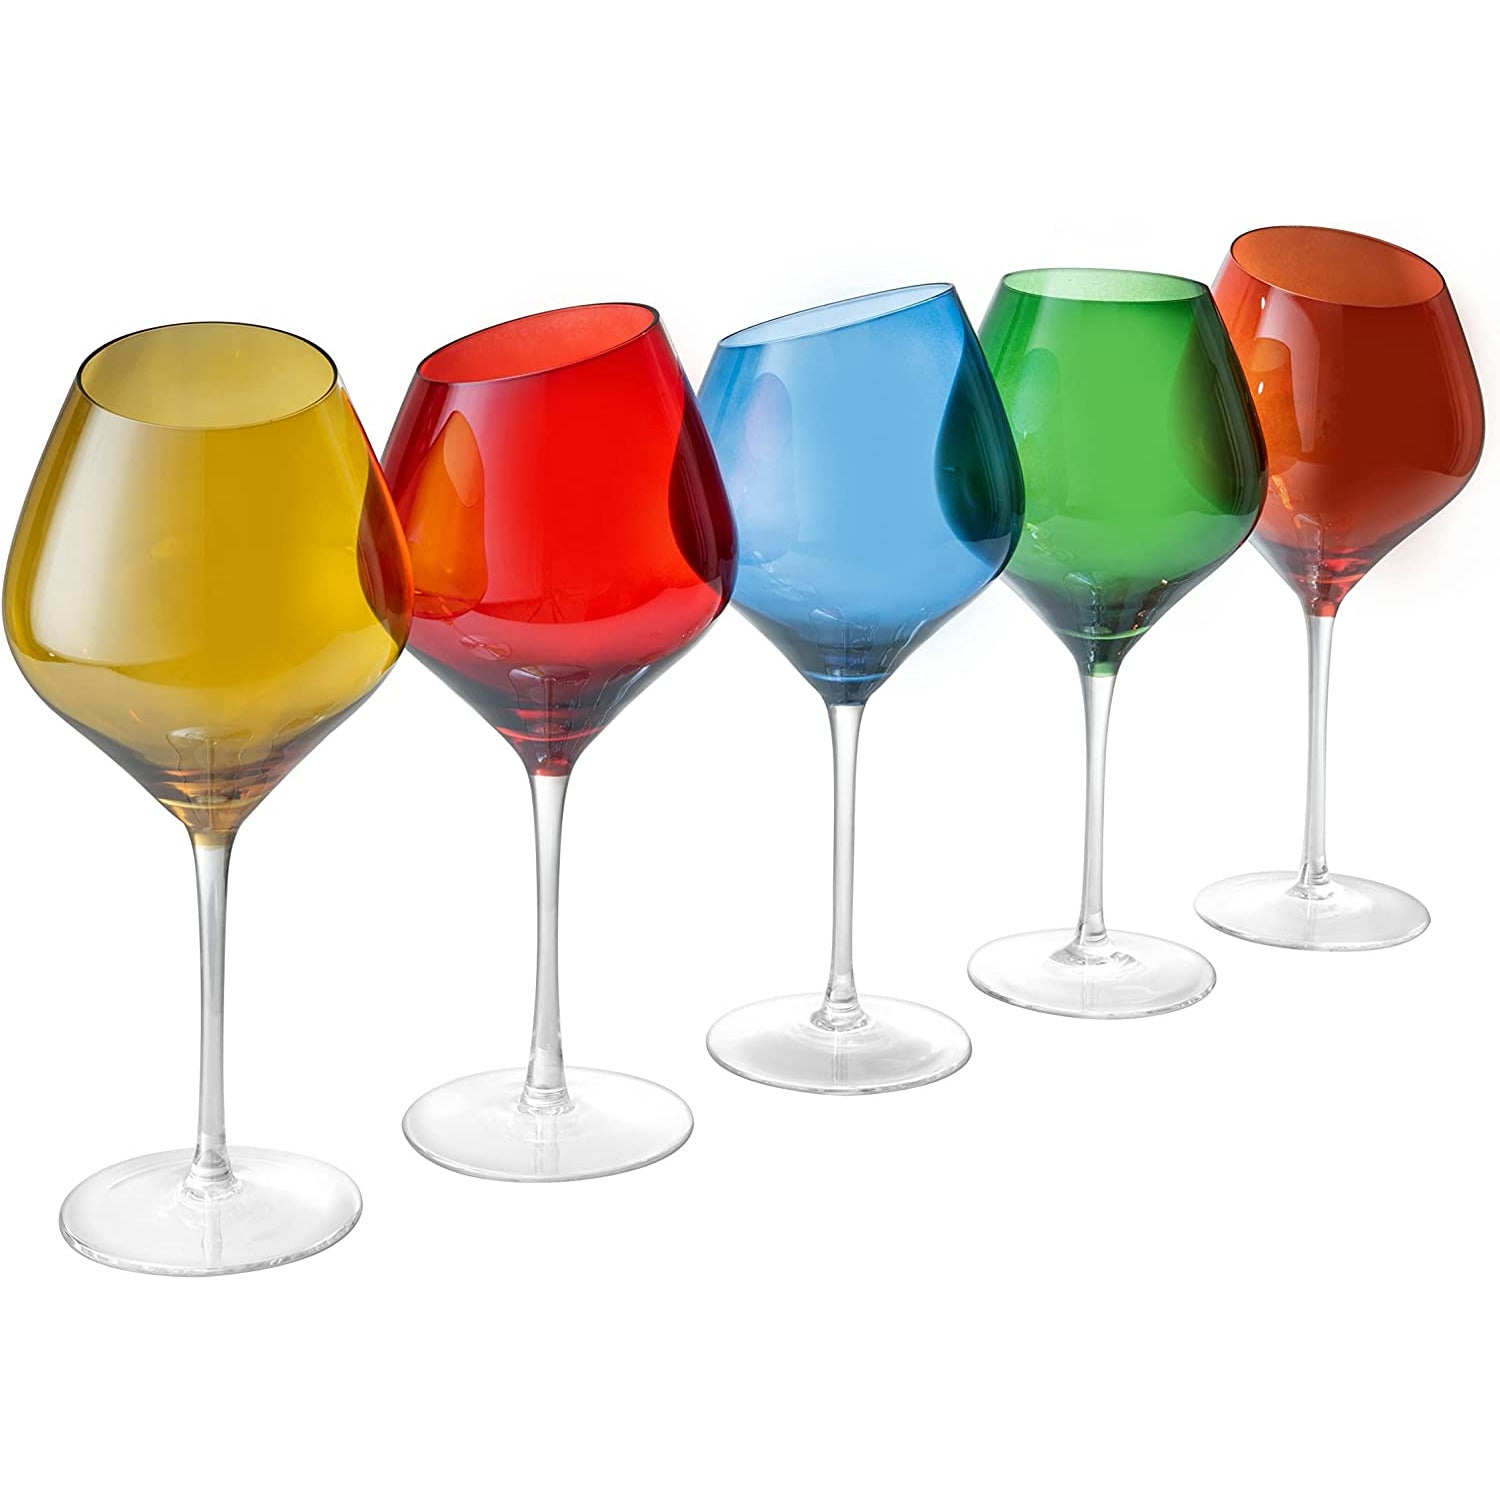 Slanted Rim Colored Wine Glasses by The Wine Savant – Set of 5 Stylish